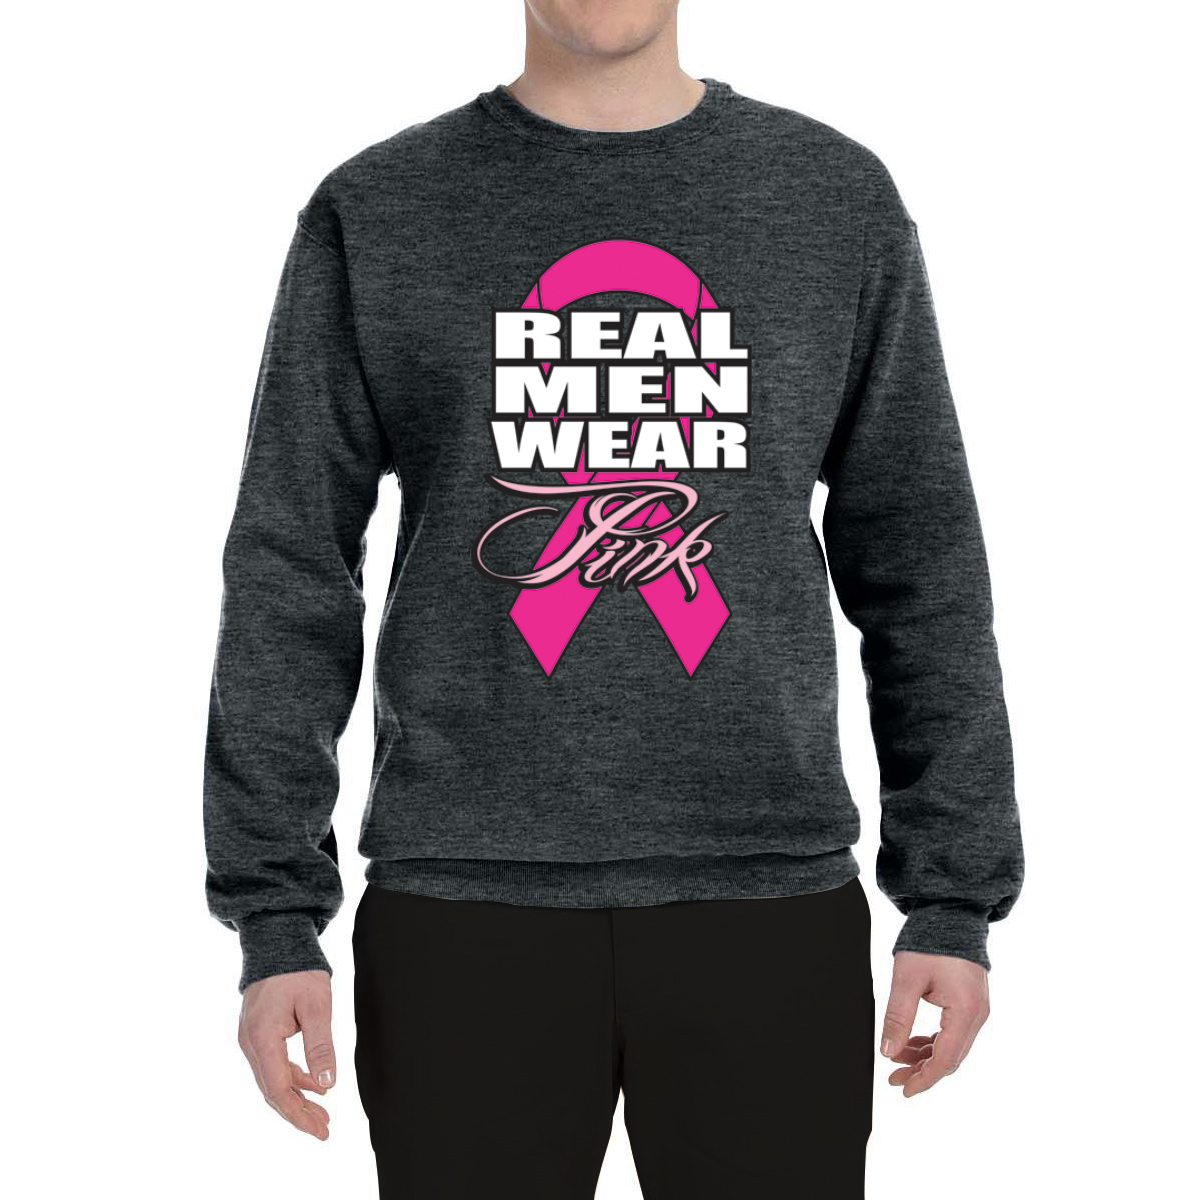 REAL MEN WEAR PINK T-shirt Breast Cancer Support Awareness Crew Sweatshirt 